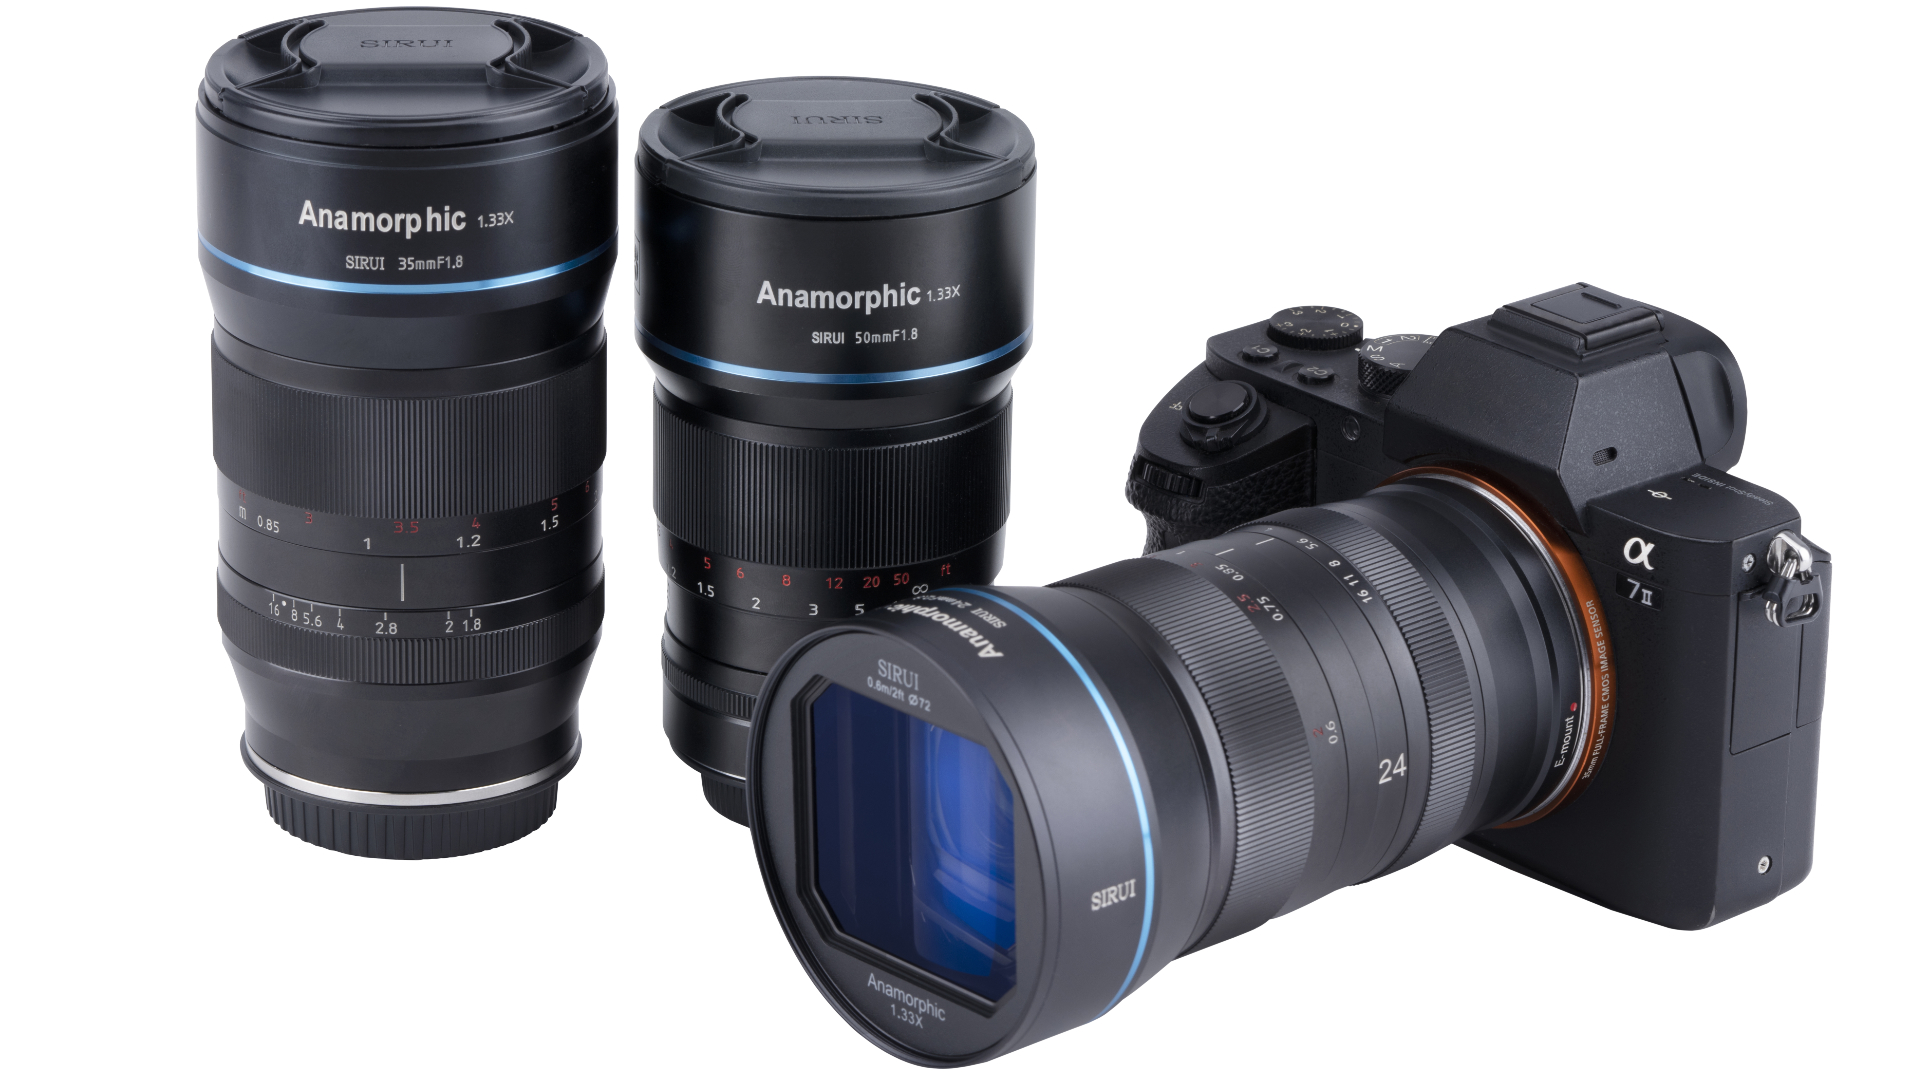 SIRUI 24mm F2.8 Anamorphic 1.33x Lens Announced | CineD